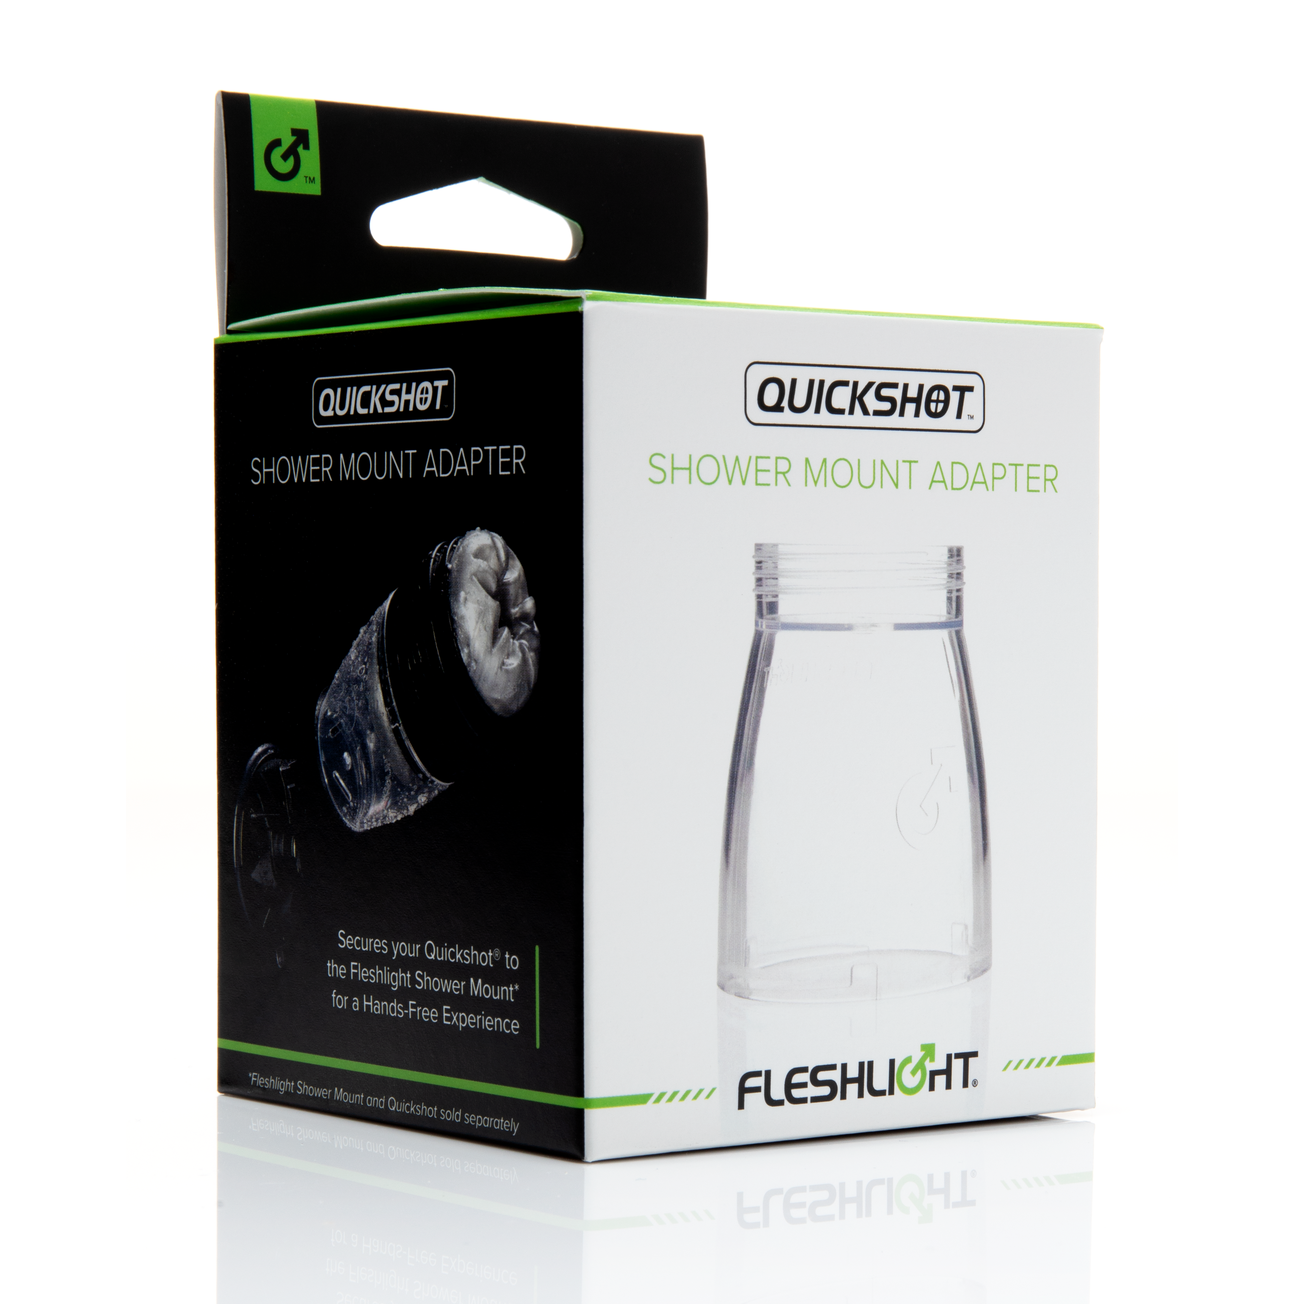 Quickshot Shower Mount Adapter Fleshlight Accessory